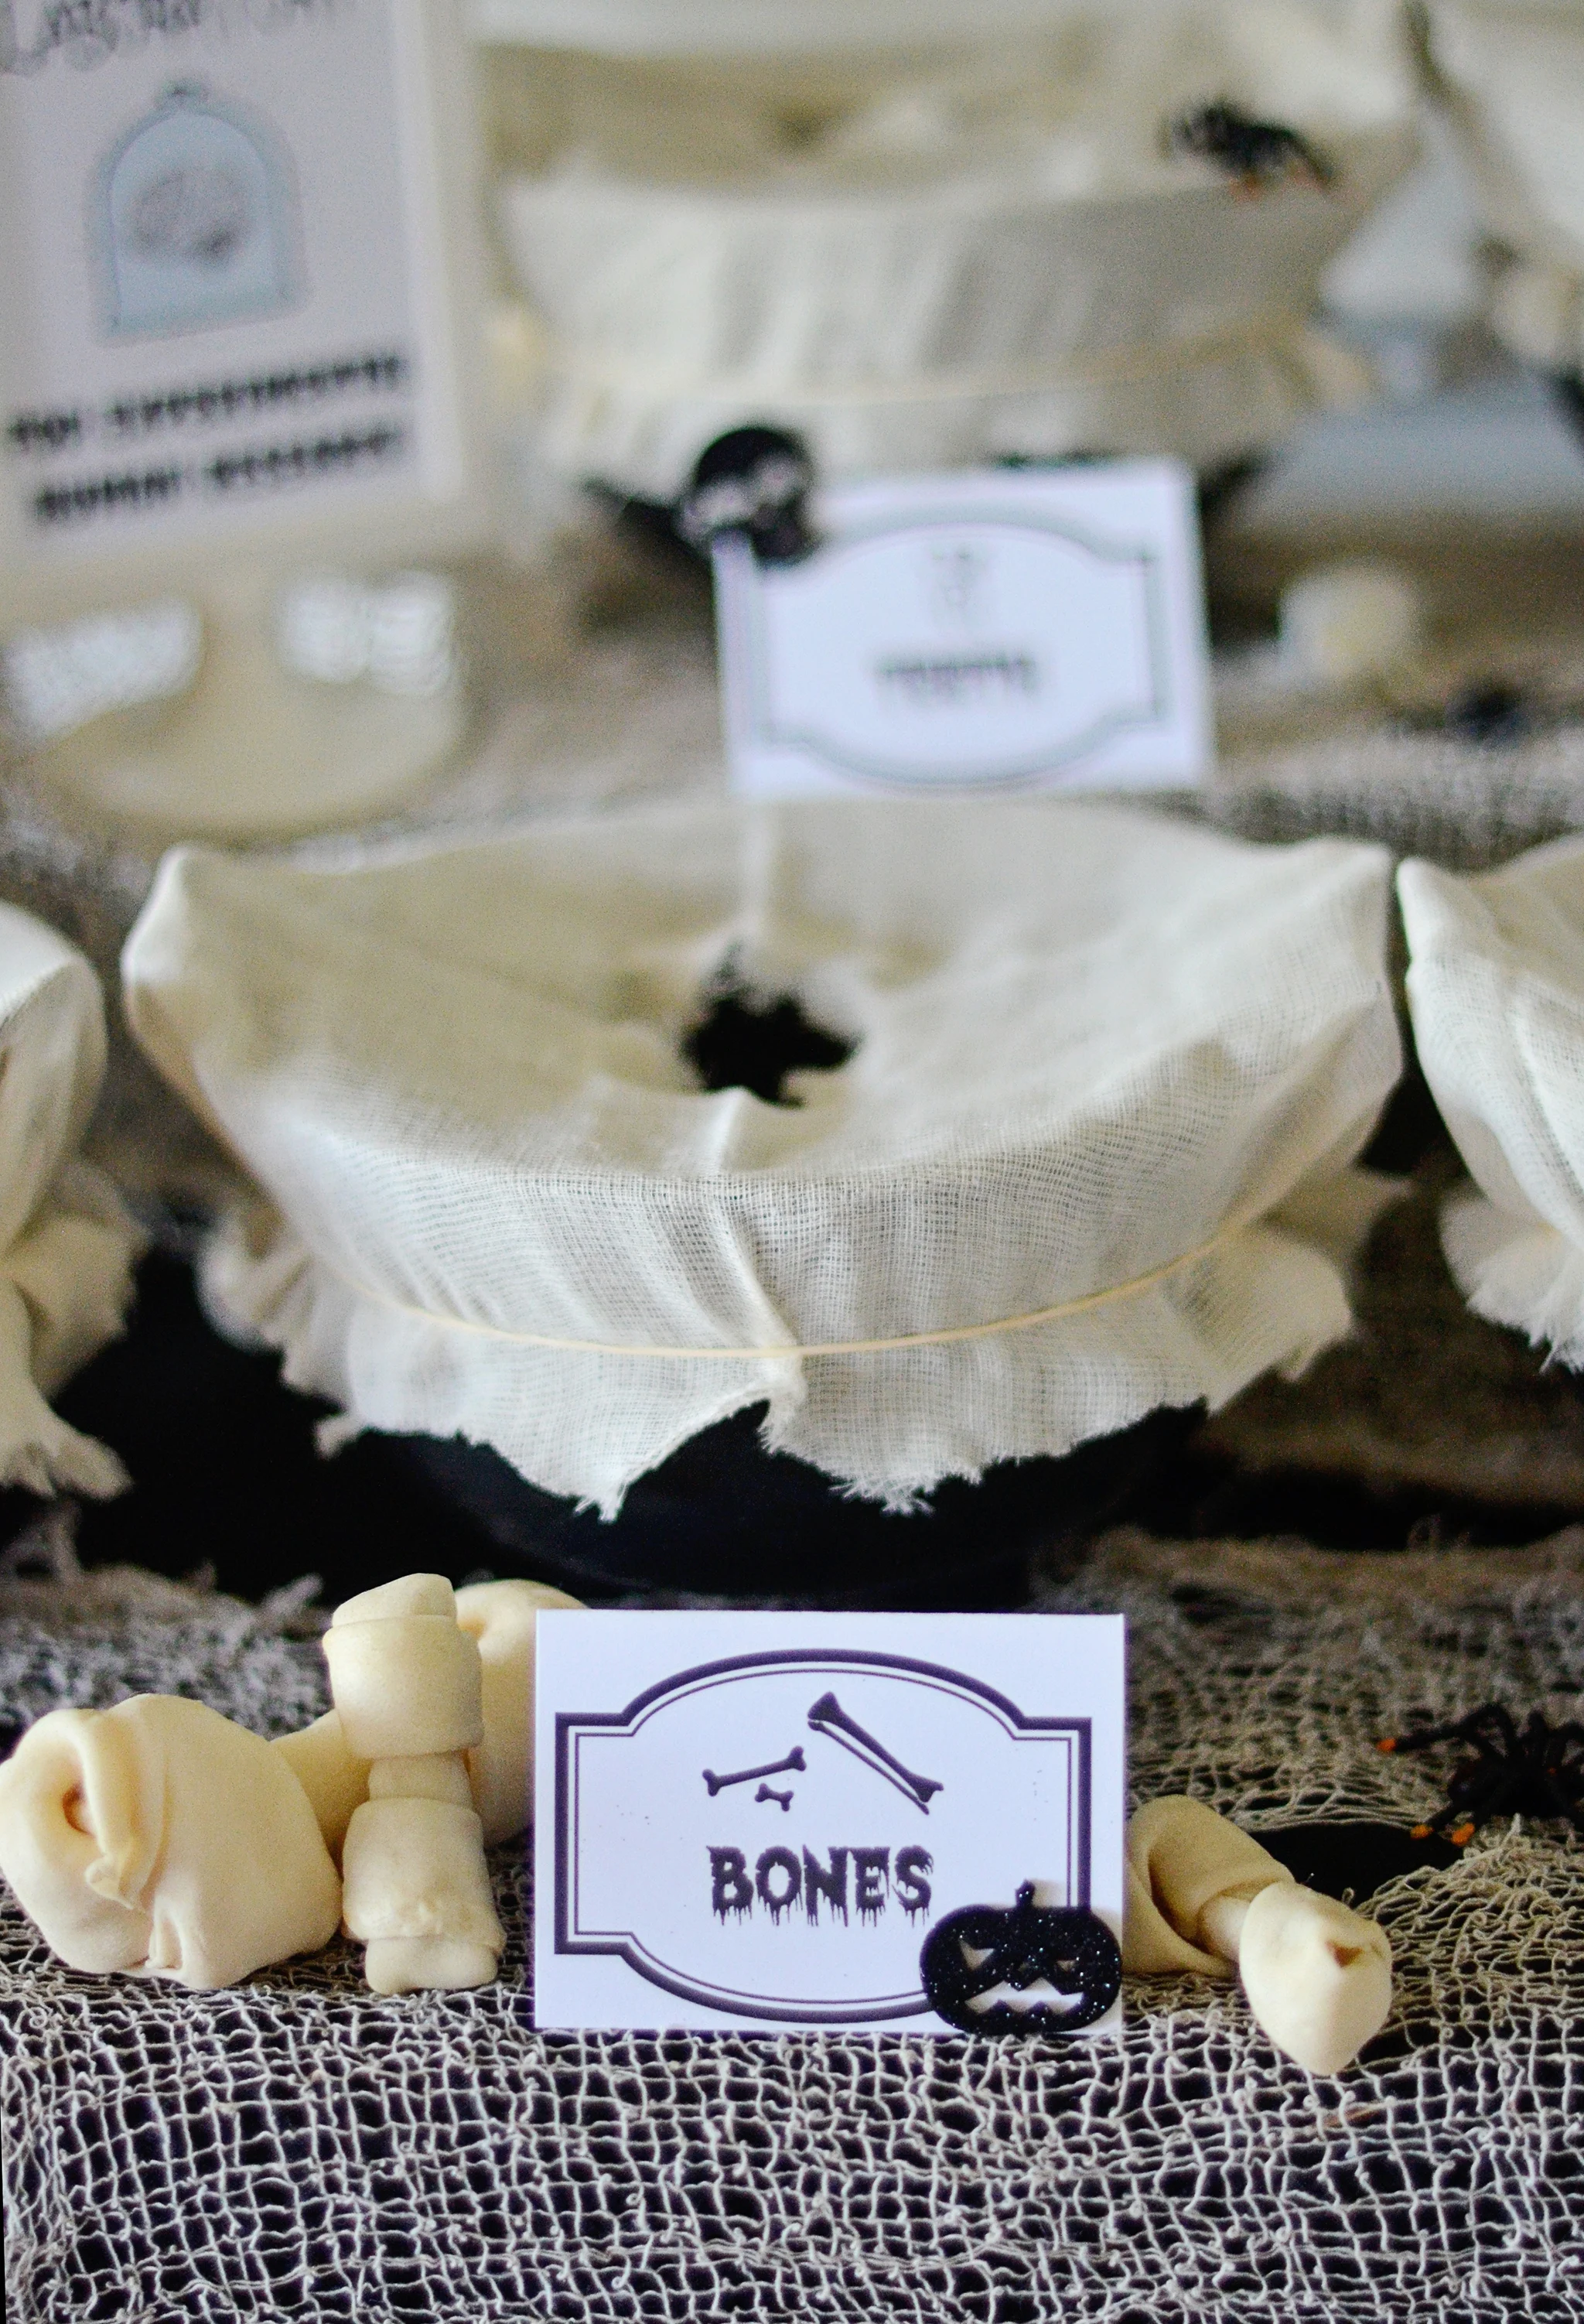 Bones! Rawhide dog bones